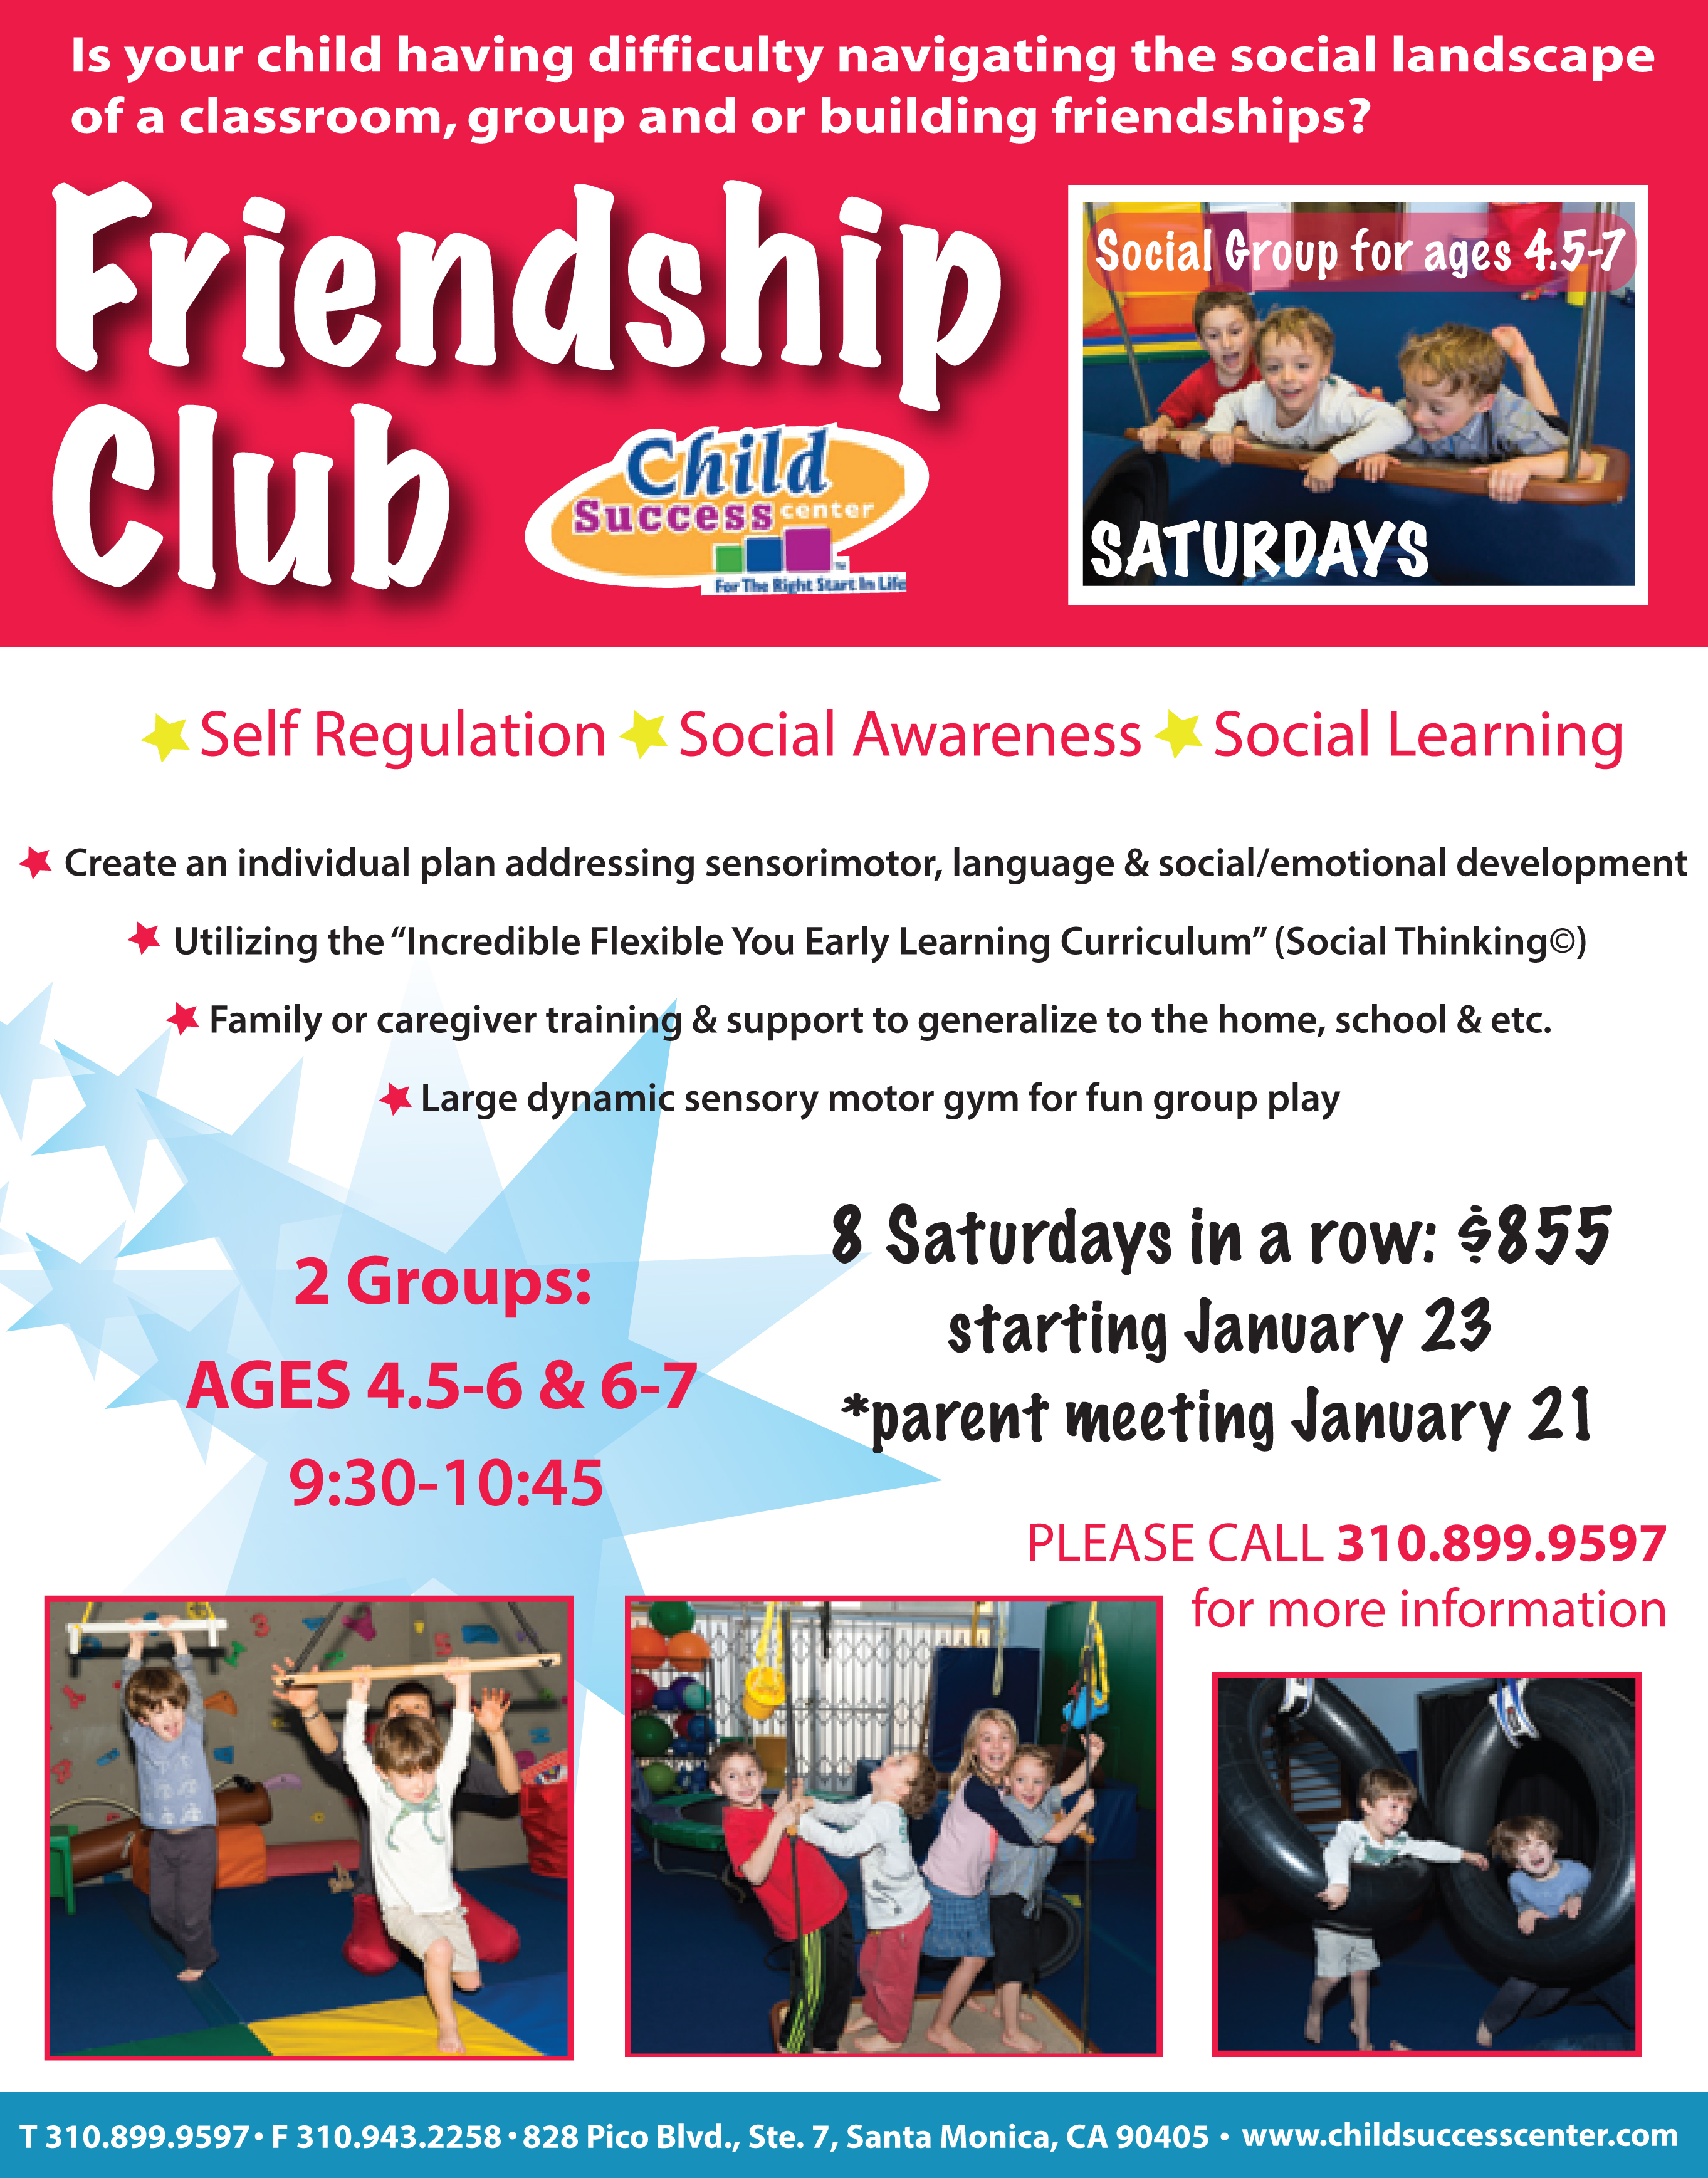 Child Success Center Friendship Club - Winter 2016 Session